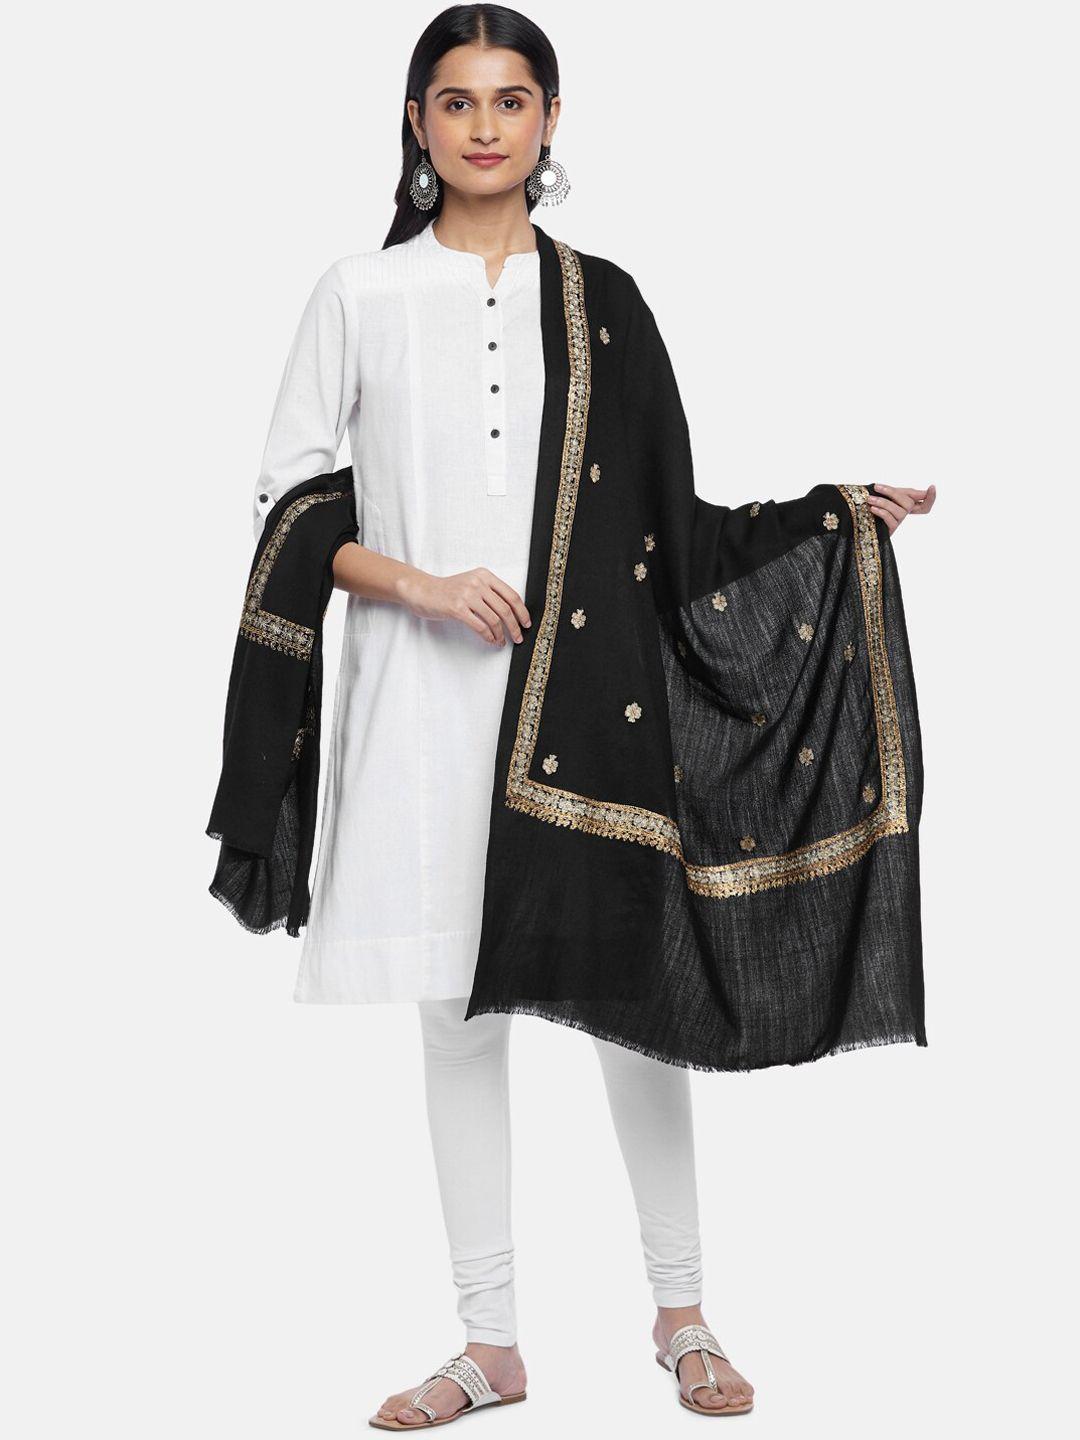 rangmanch by pantaloons women black emberoidered shawl